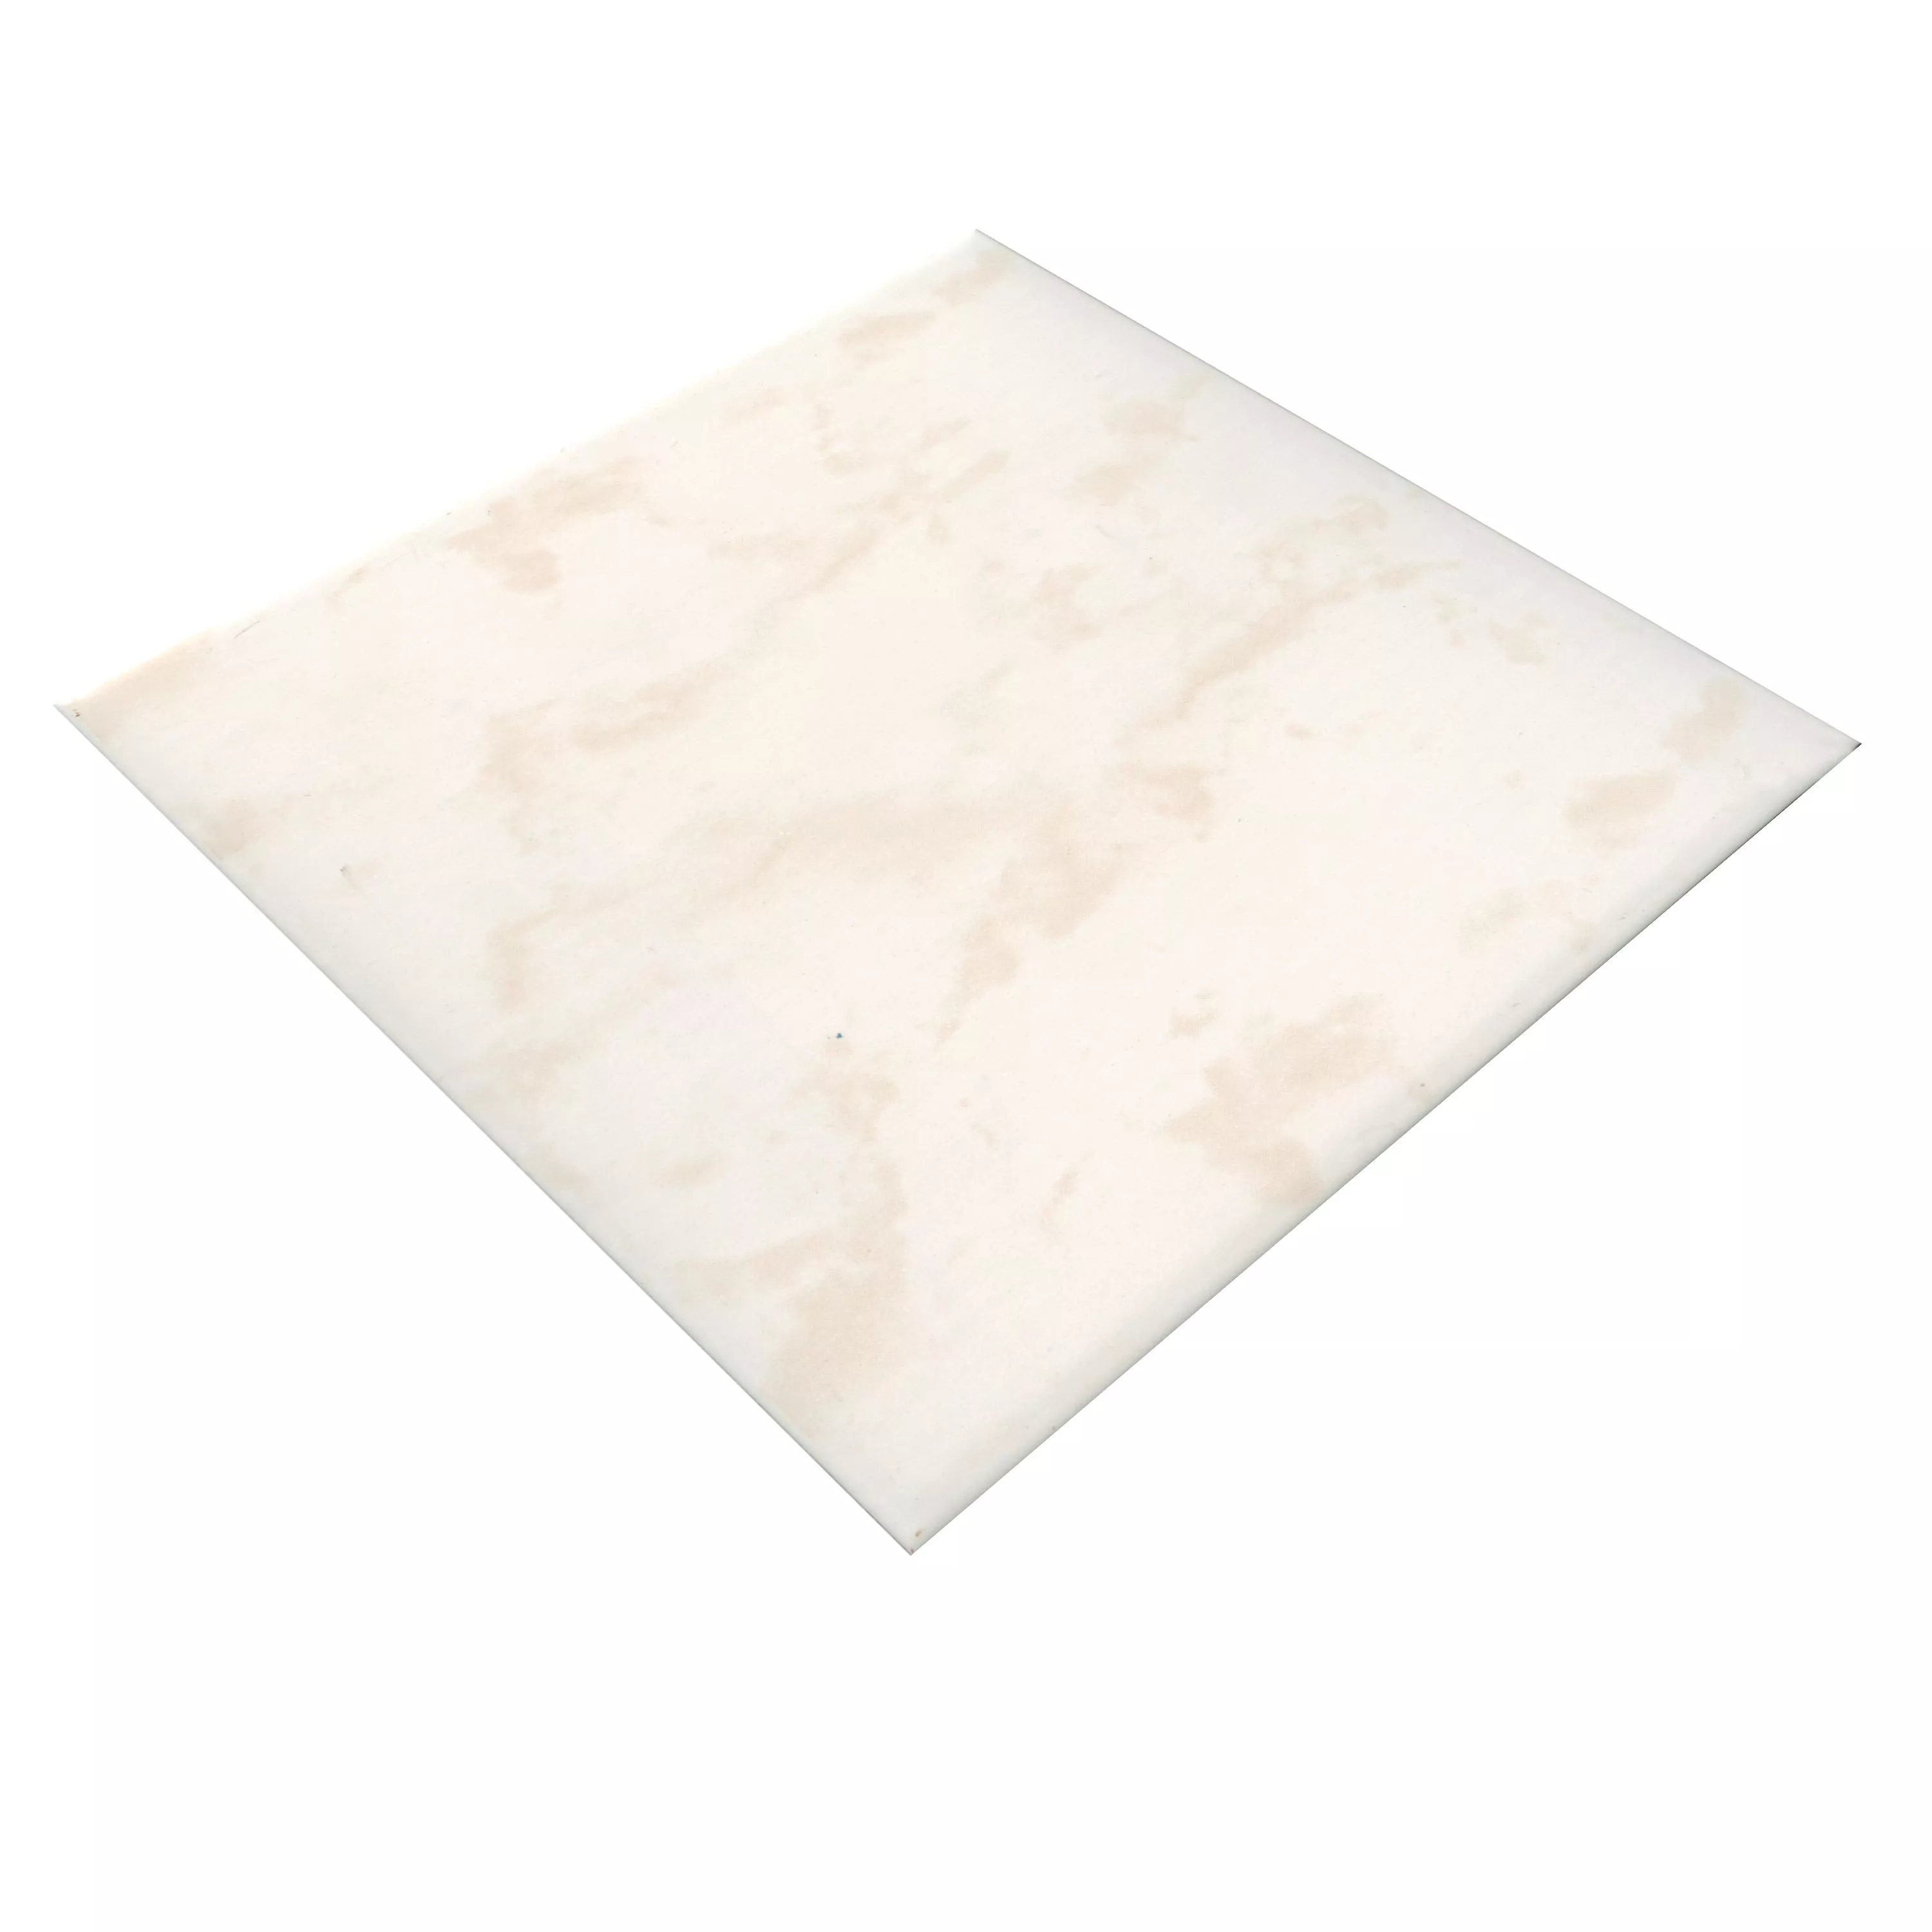 Sample Floor Tiles Kayhude Marbled 20x20cm Beige